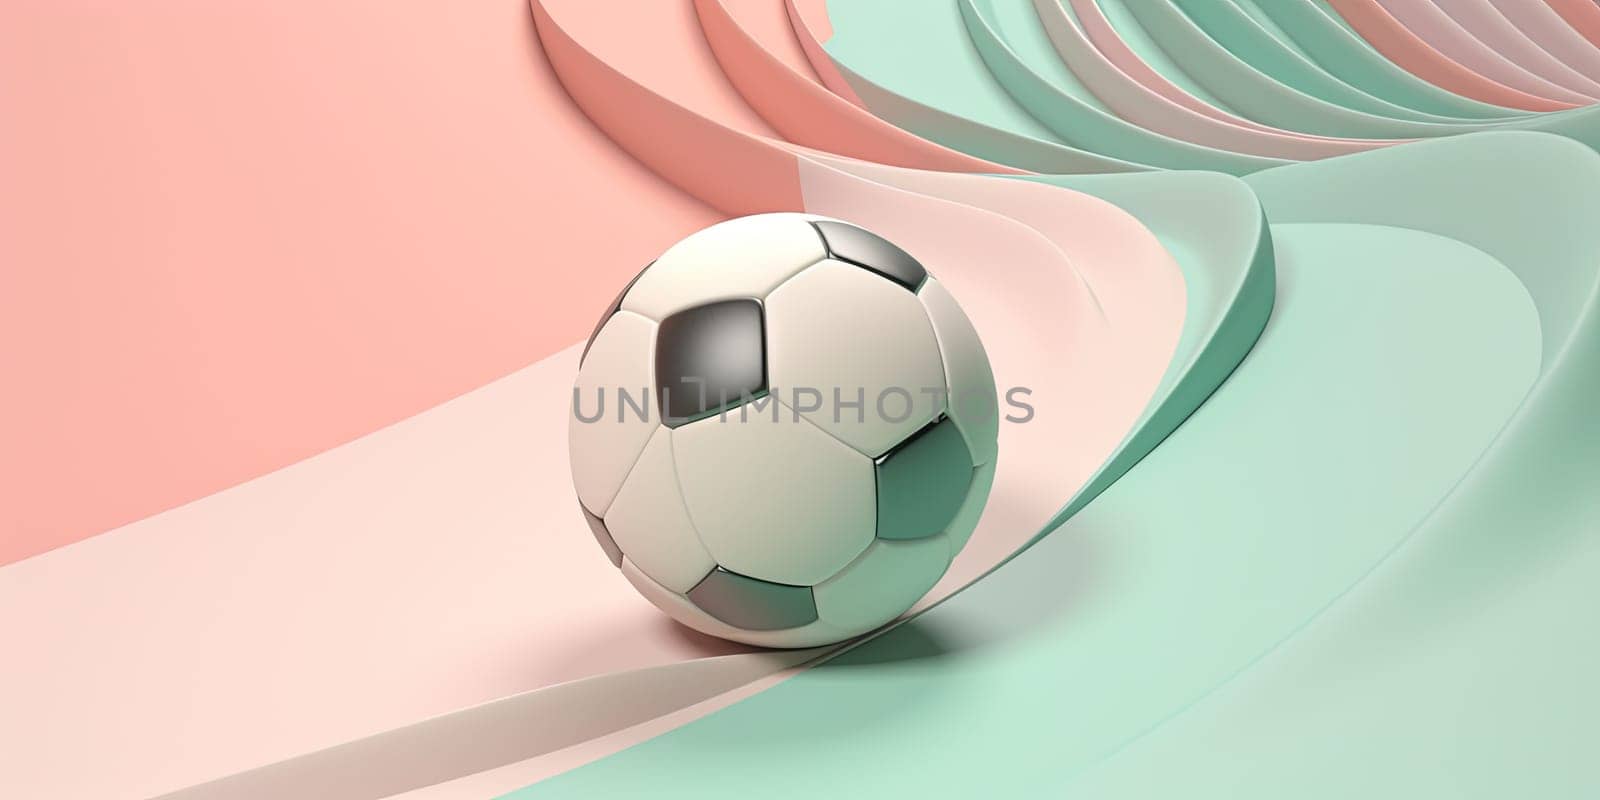 Illustration Of Soccer Ball On A Green Football Background by tan4ikk1